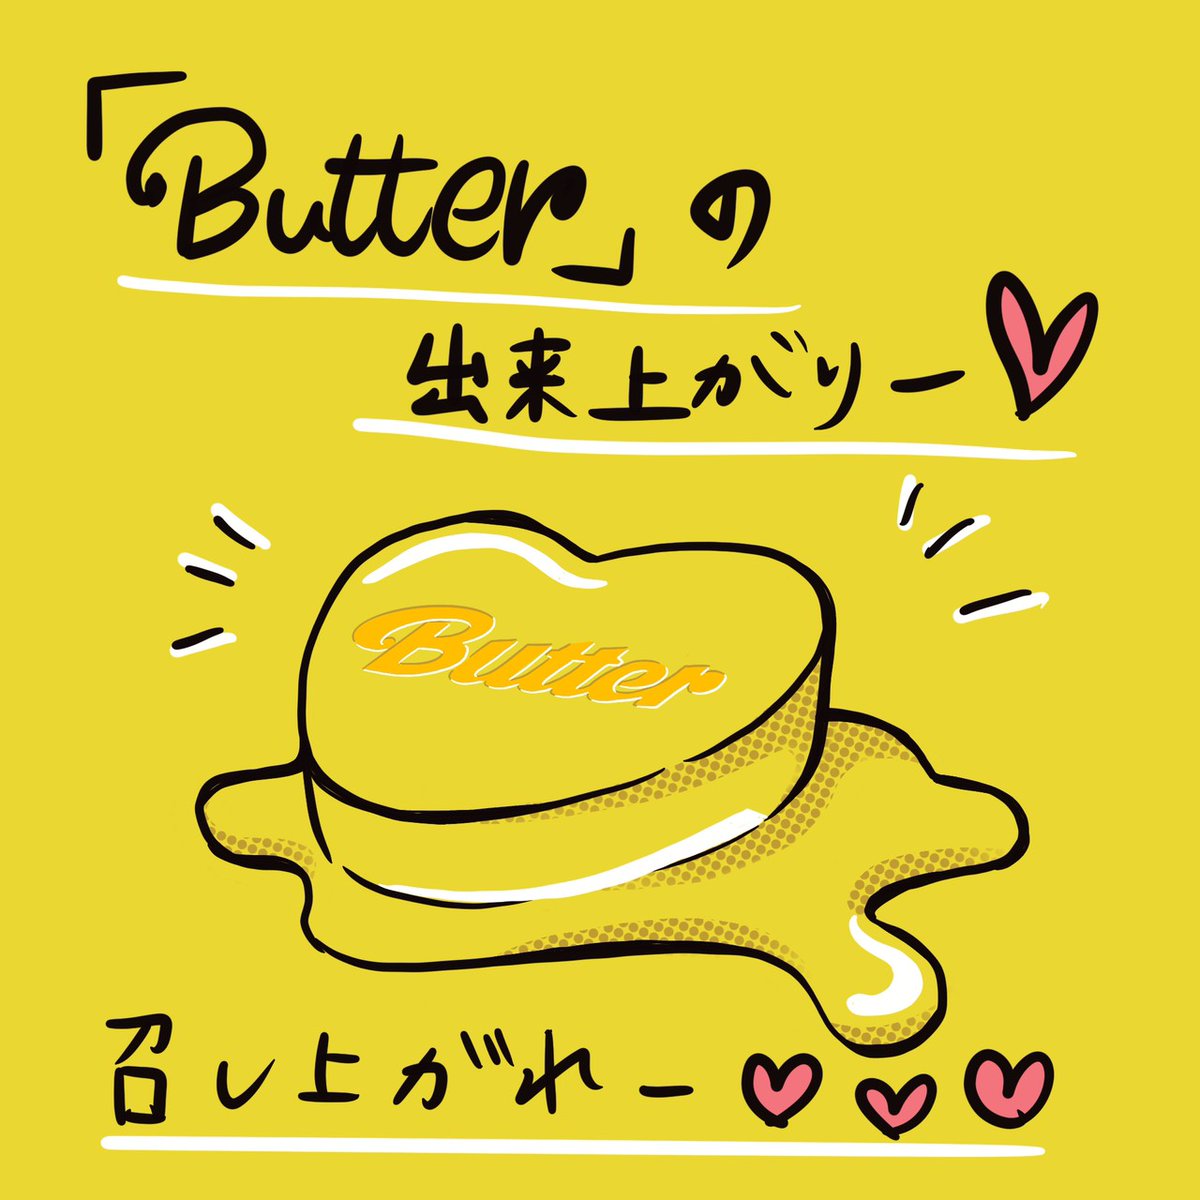 「Butter」のティーザーができるまで、こんなんだったら?
#Butter #BTS_Butter #BTS #BTSARMY #BTSART #btsfanart #RM #JIN #SUGA #jhope #jimin #TAEHYUNG #JUNGKOOK #illustration #イラスト #drawing @BTS_twt @bts_bighit 